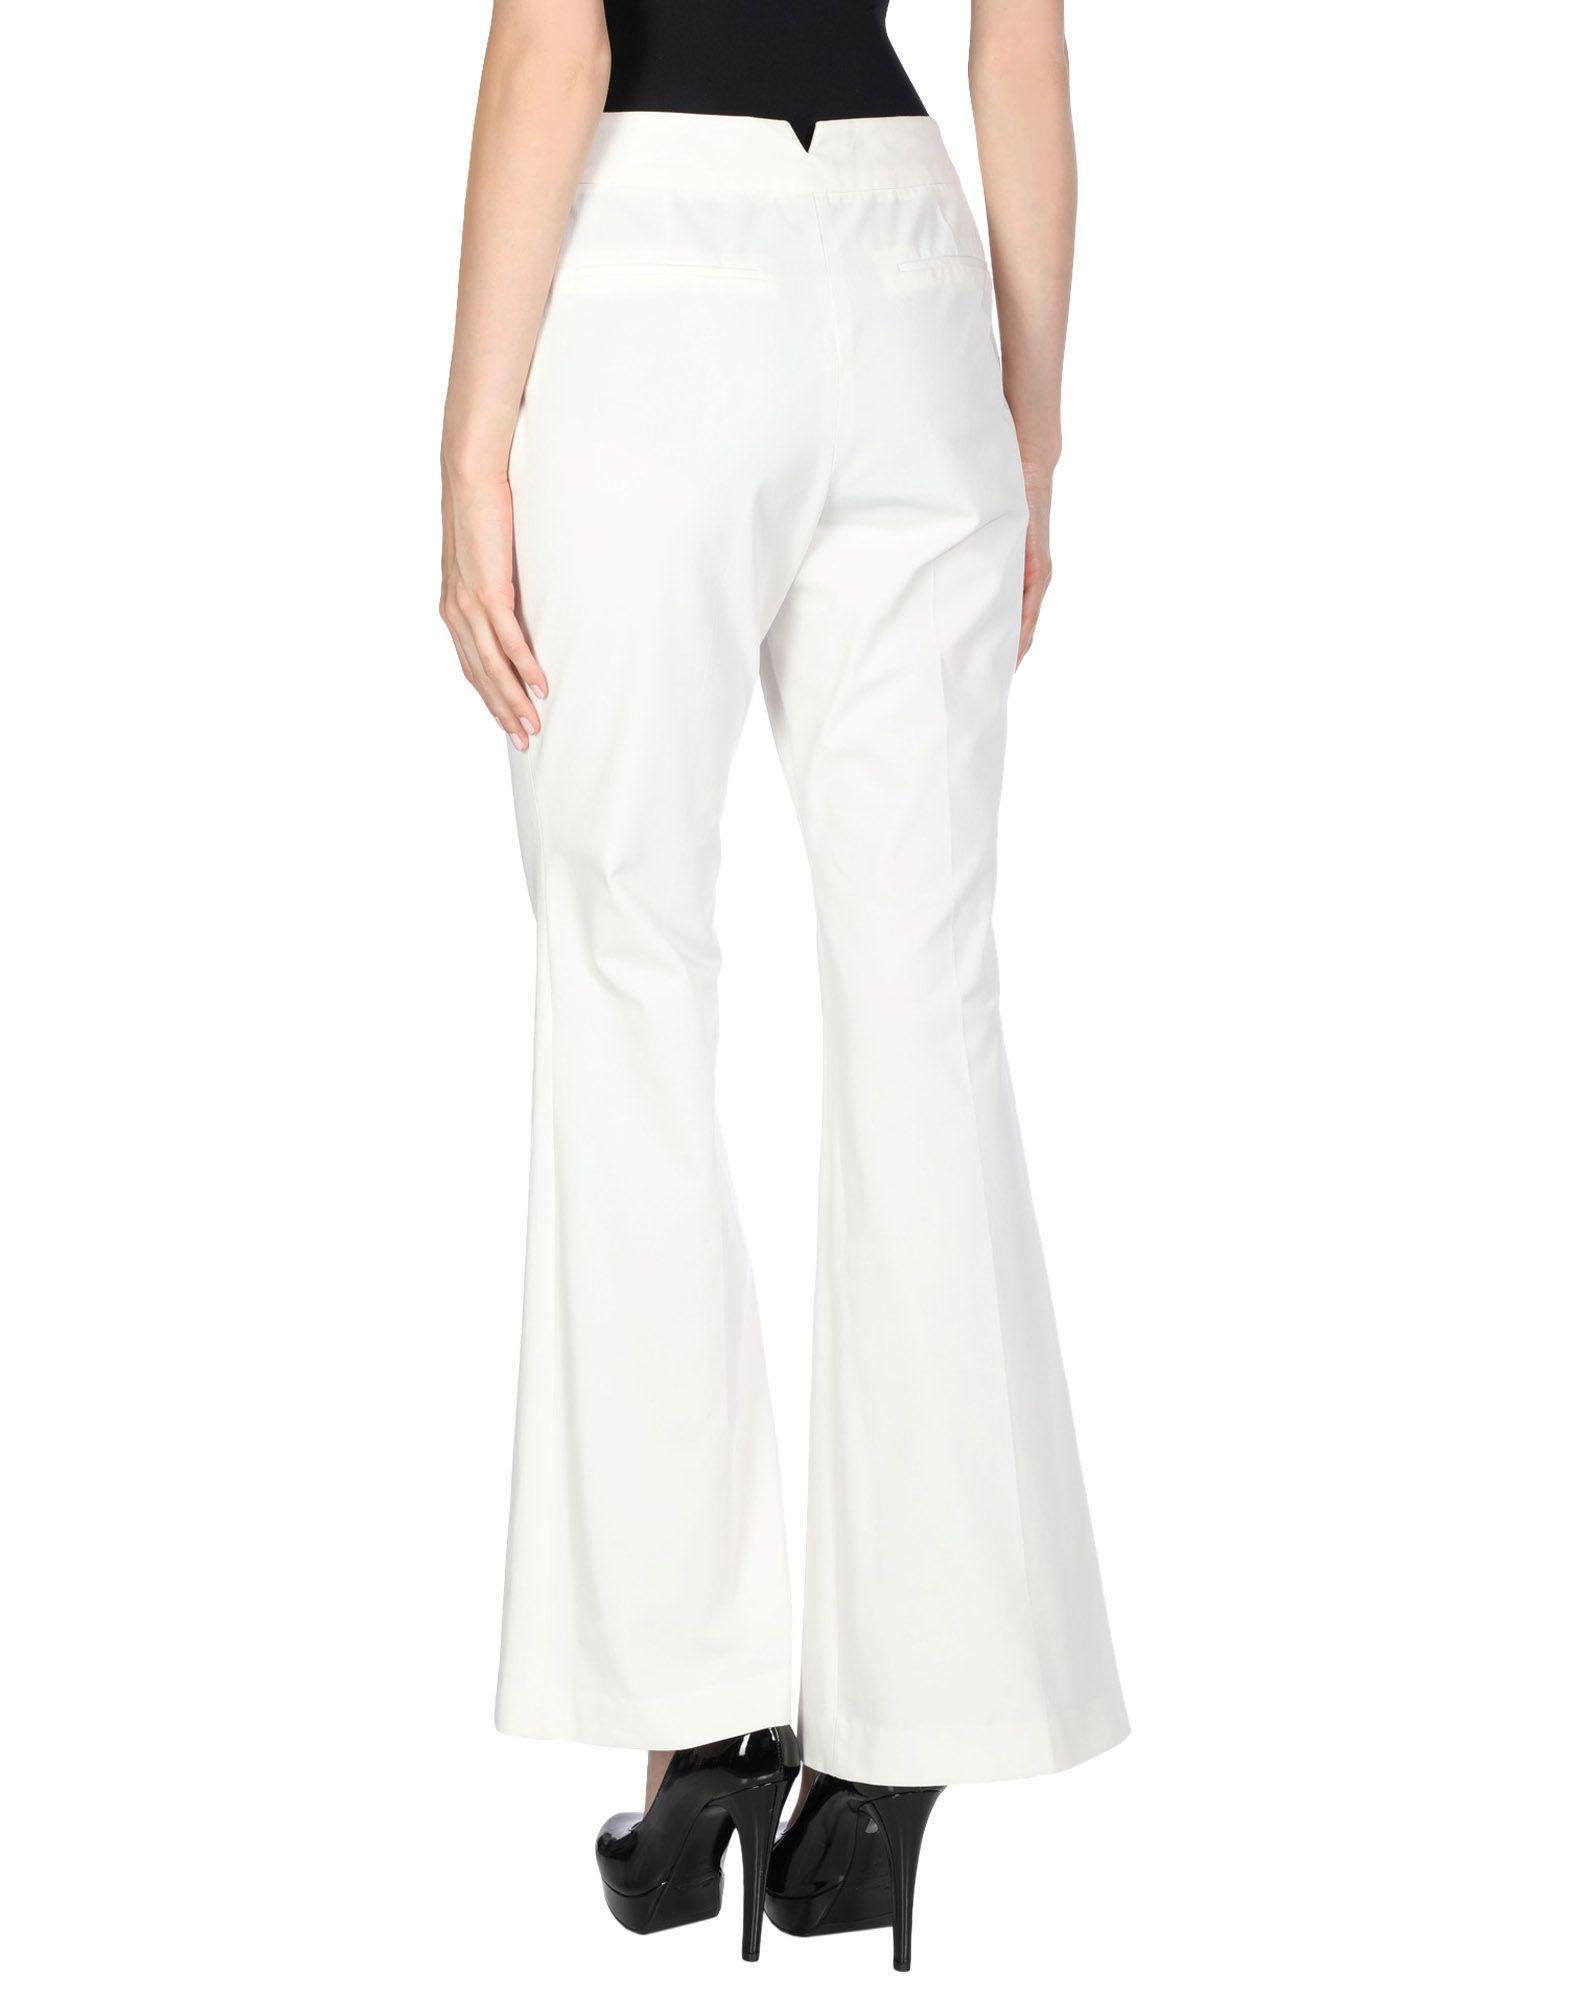 Rachel Zoe Synthetic Casual Pants in Ivory (White) - Lyst